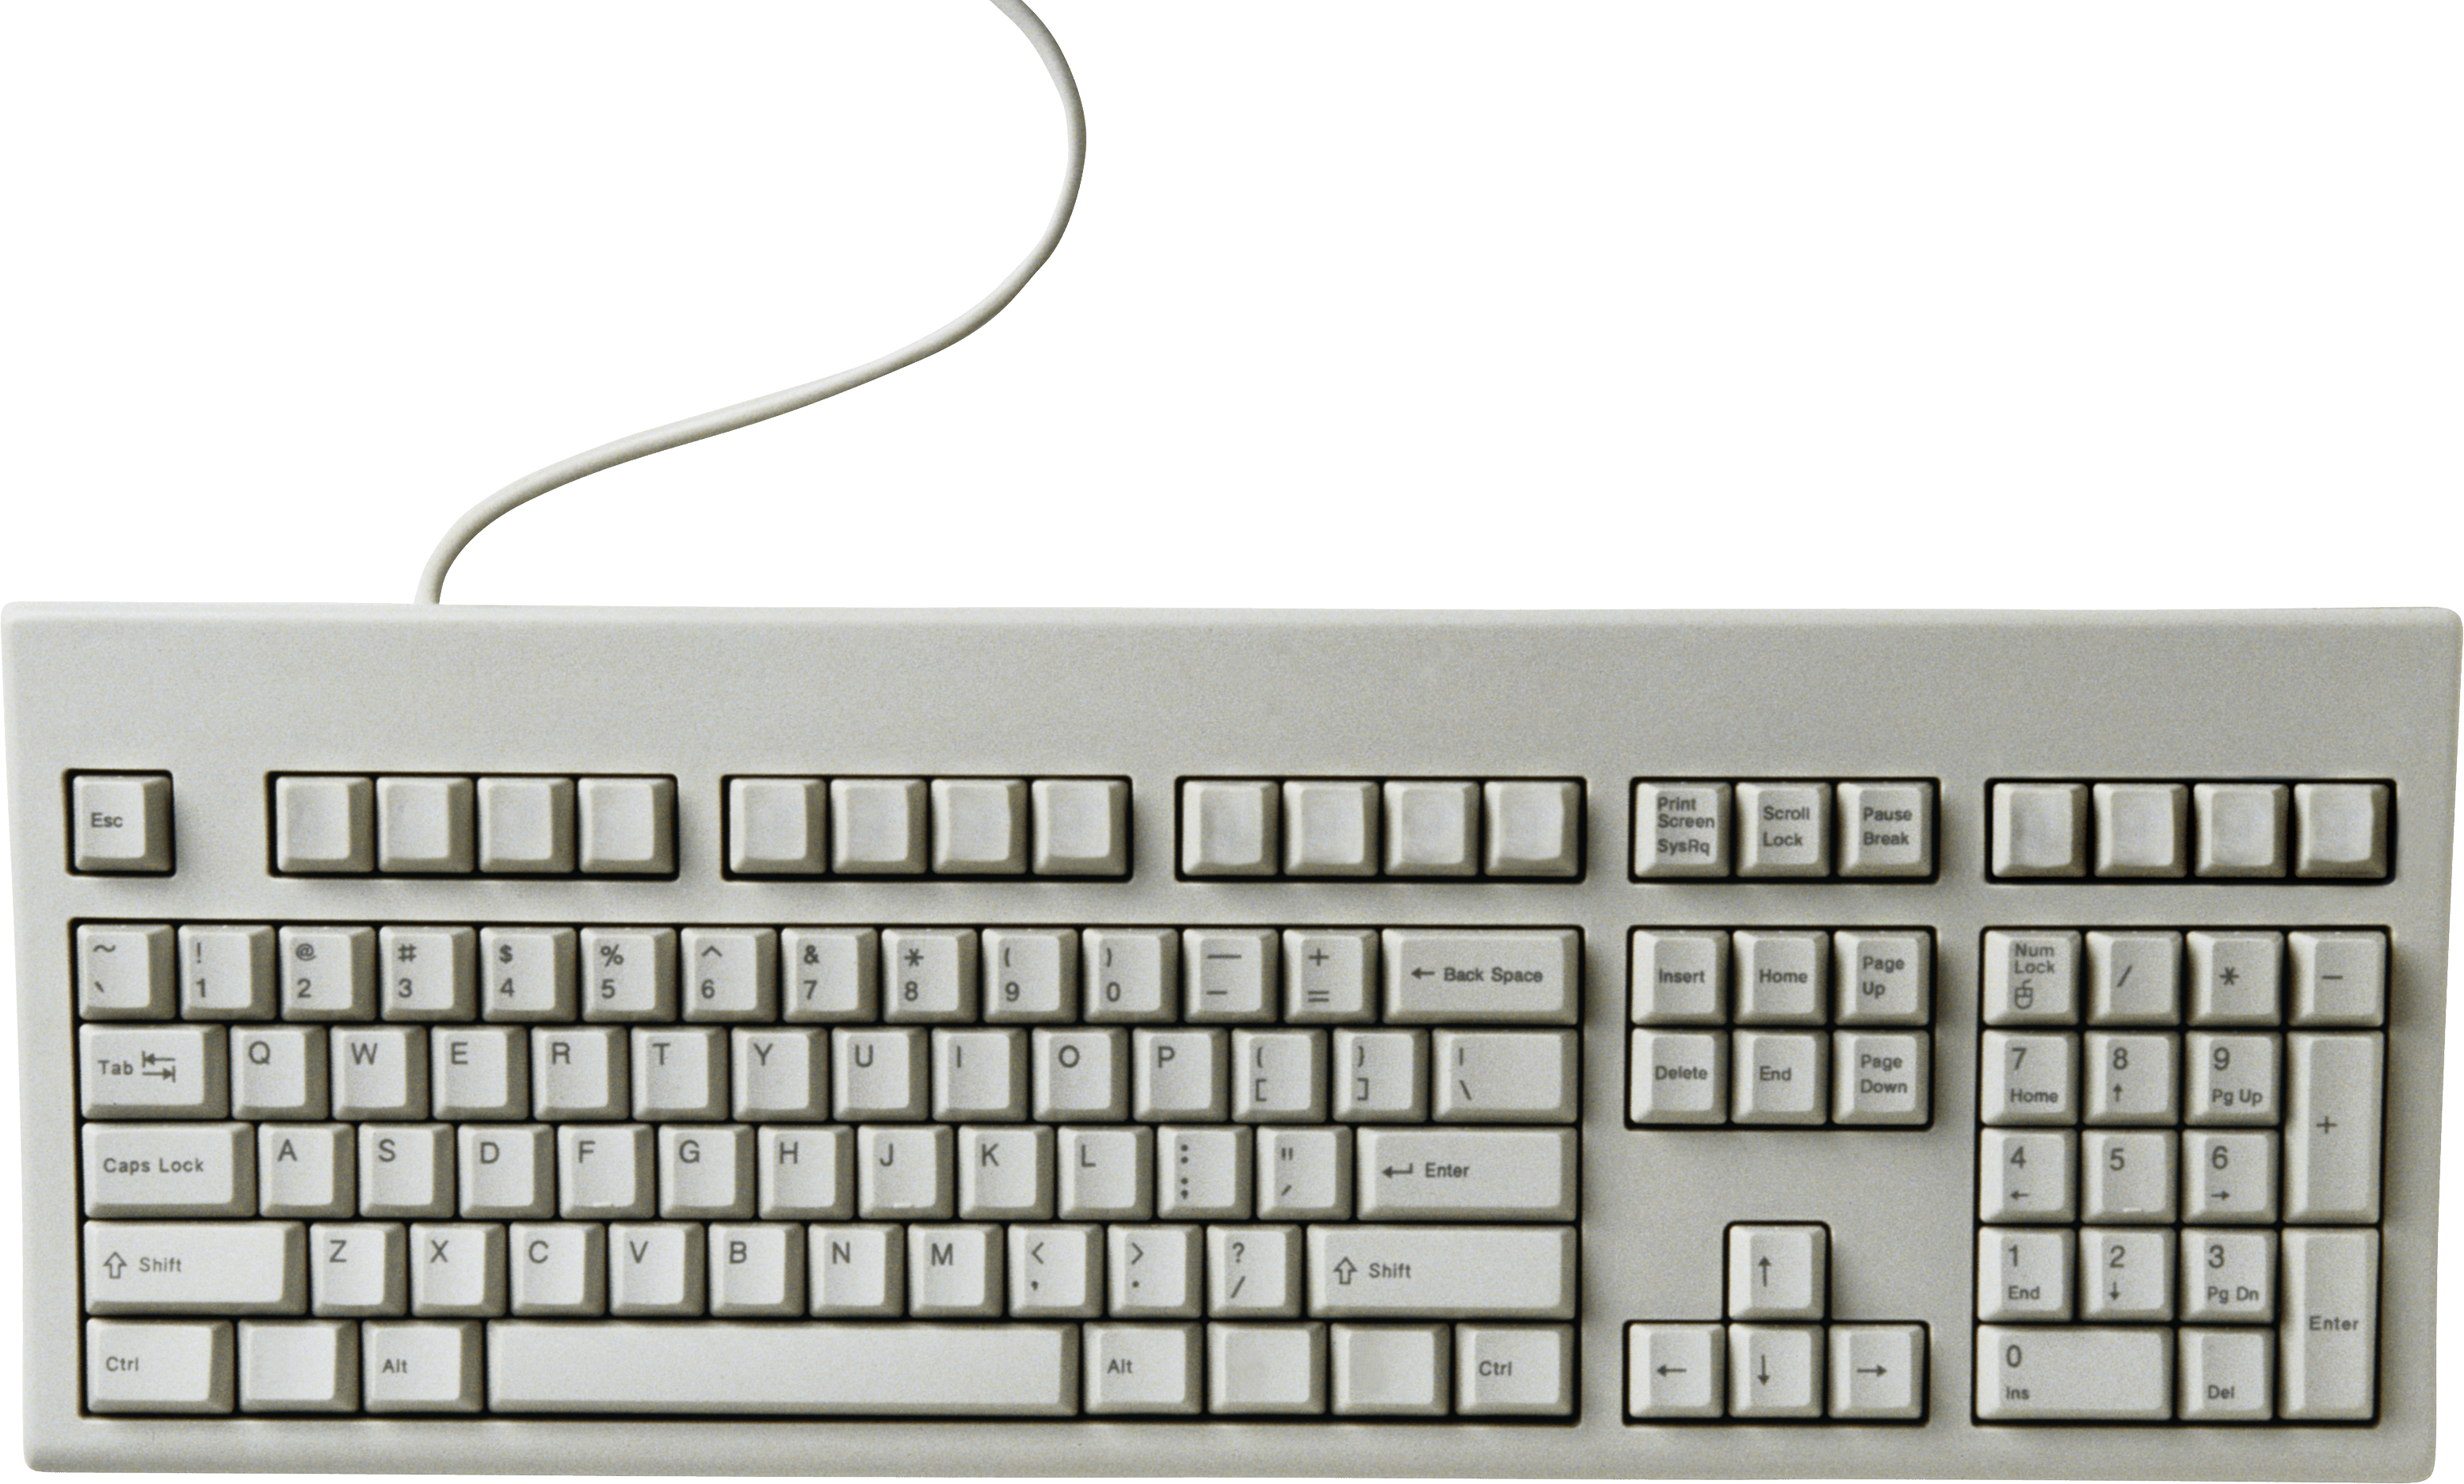 Keyboard Png Image PNG Image